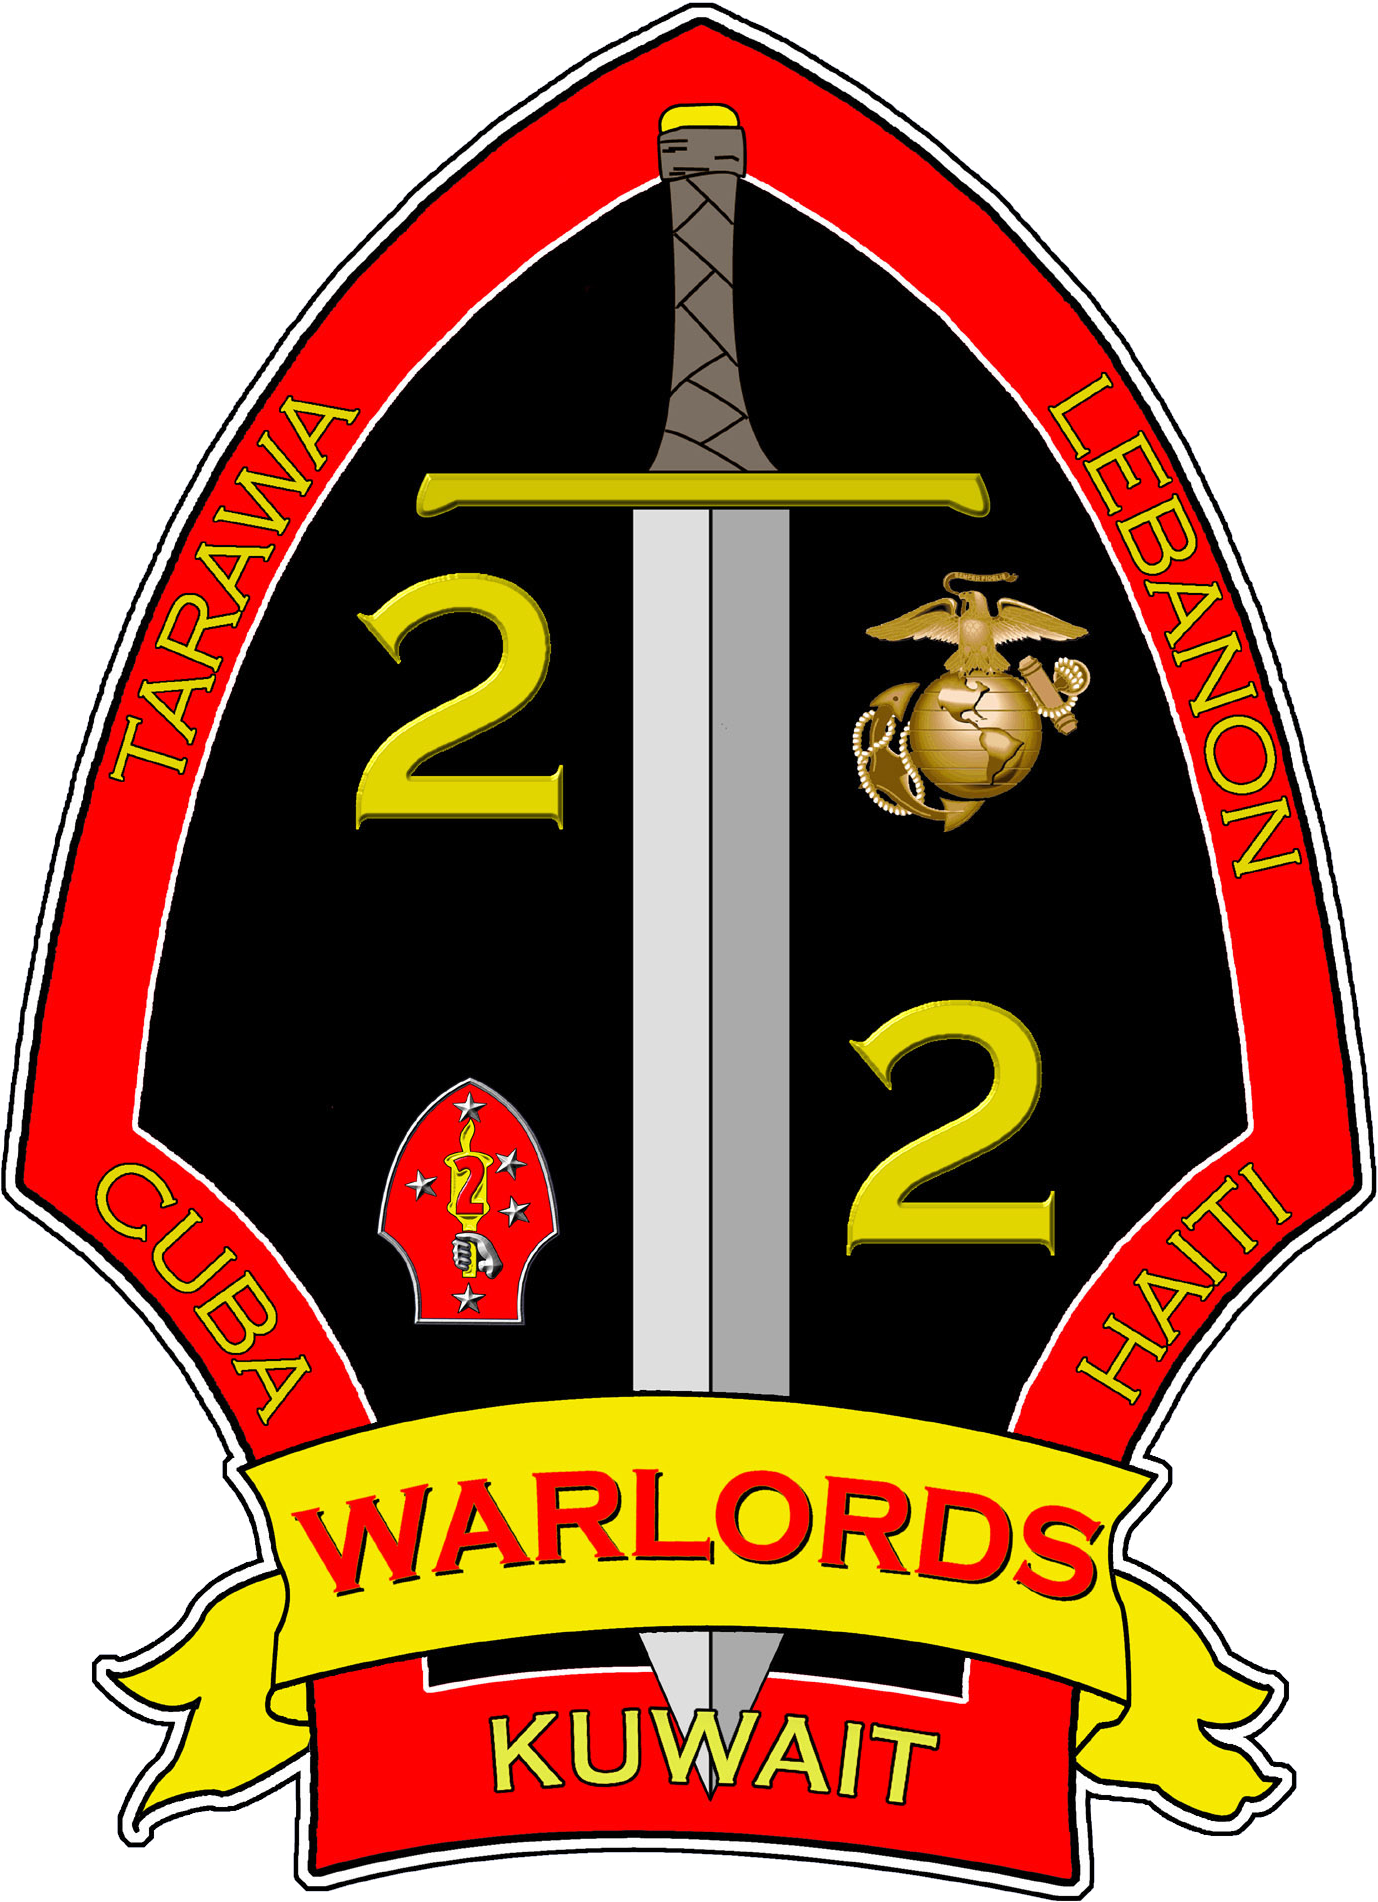 2nd Battalion Marines Logopng - 2nd Battalion 2nd Marines (1429x2000)